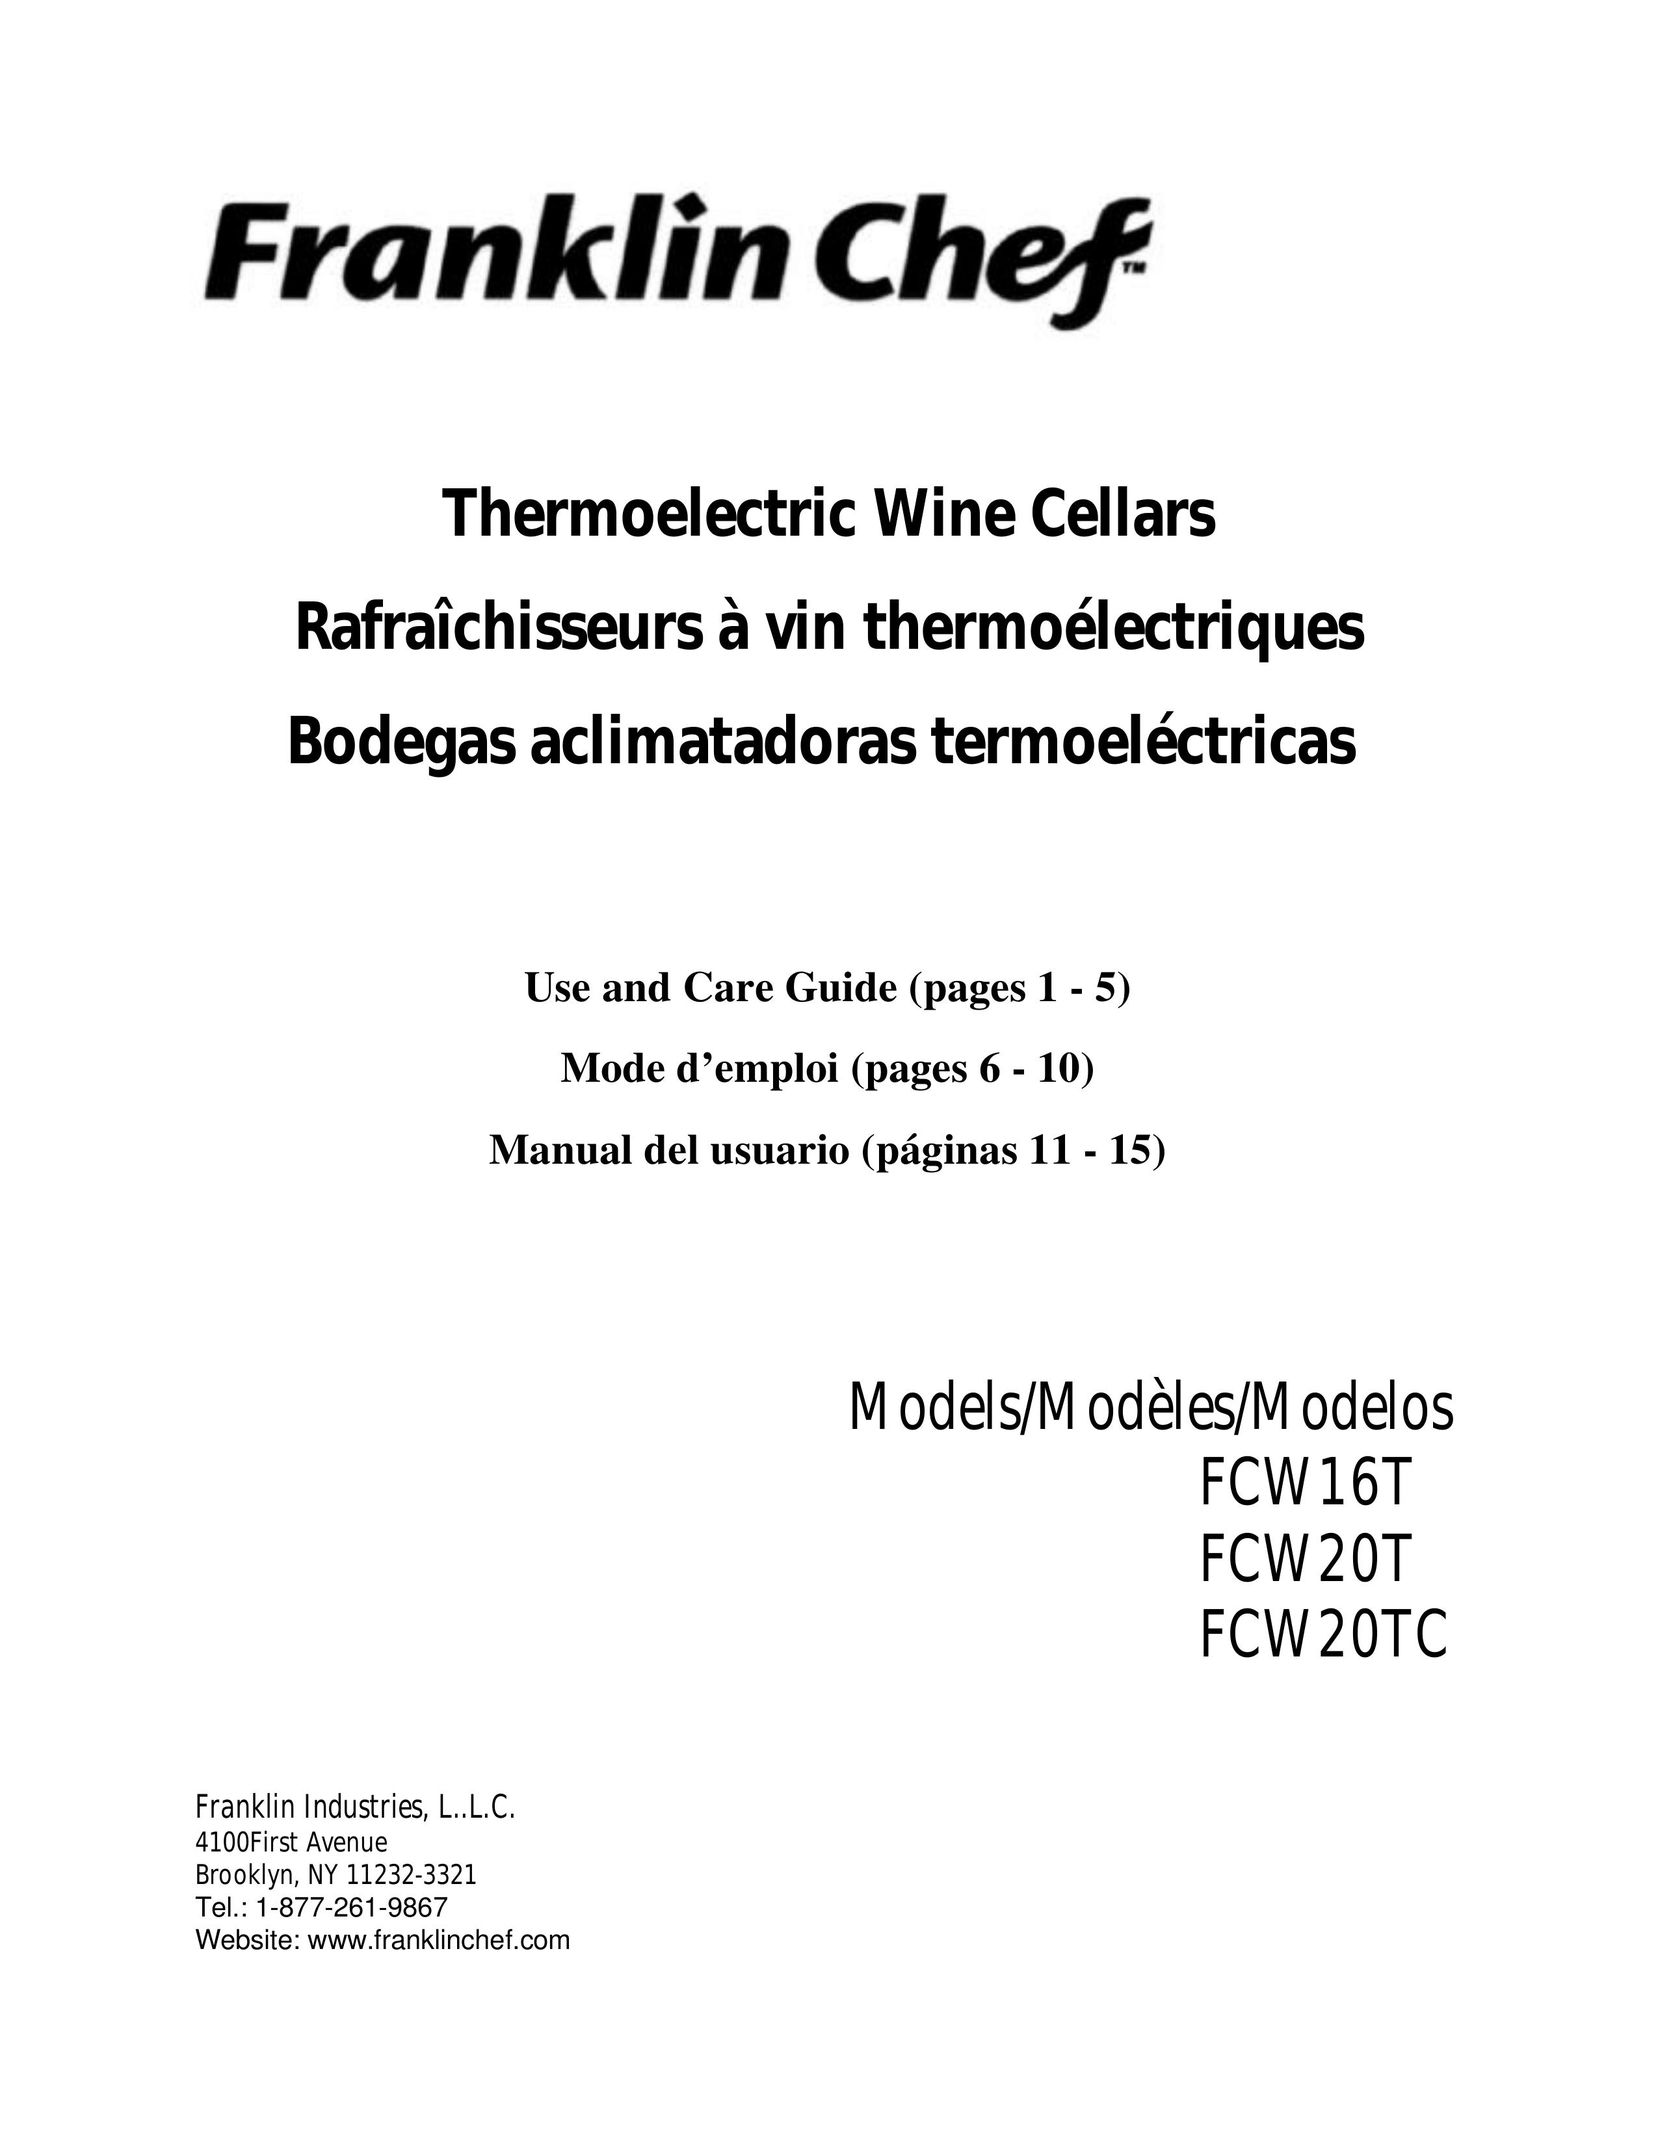 Franklin Industries, L.L.C. FCW20T Beverage Dispenser User Manual